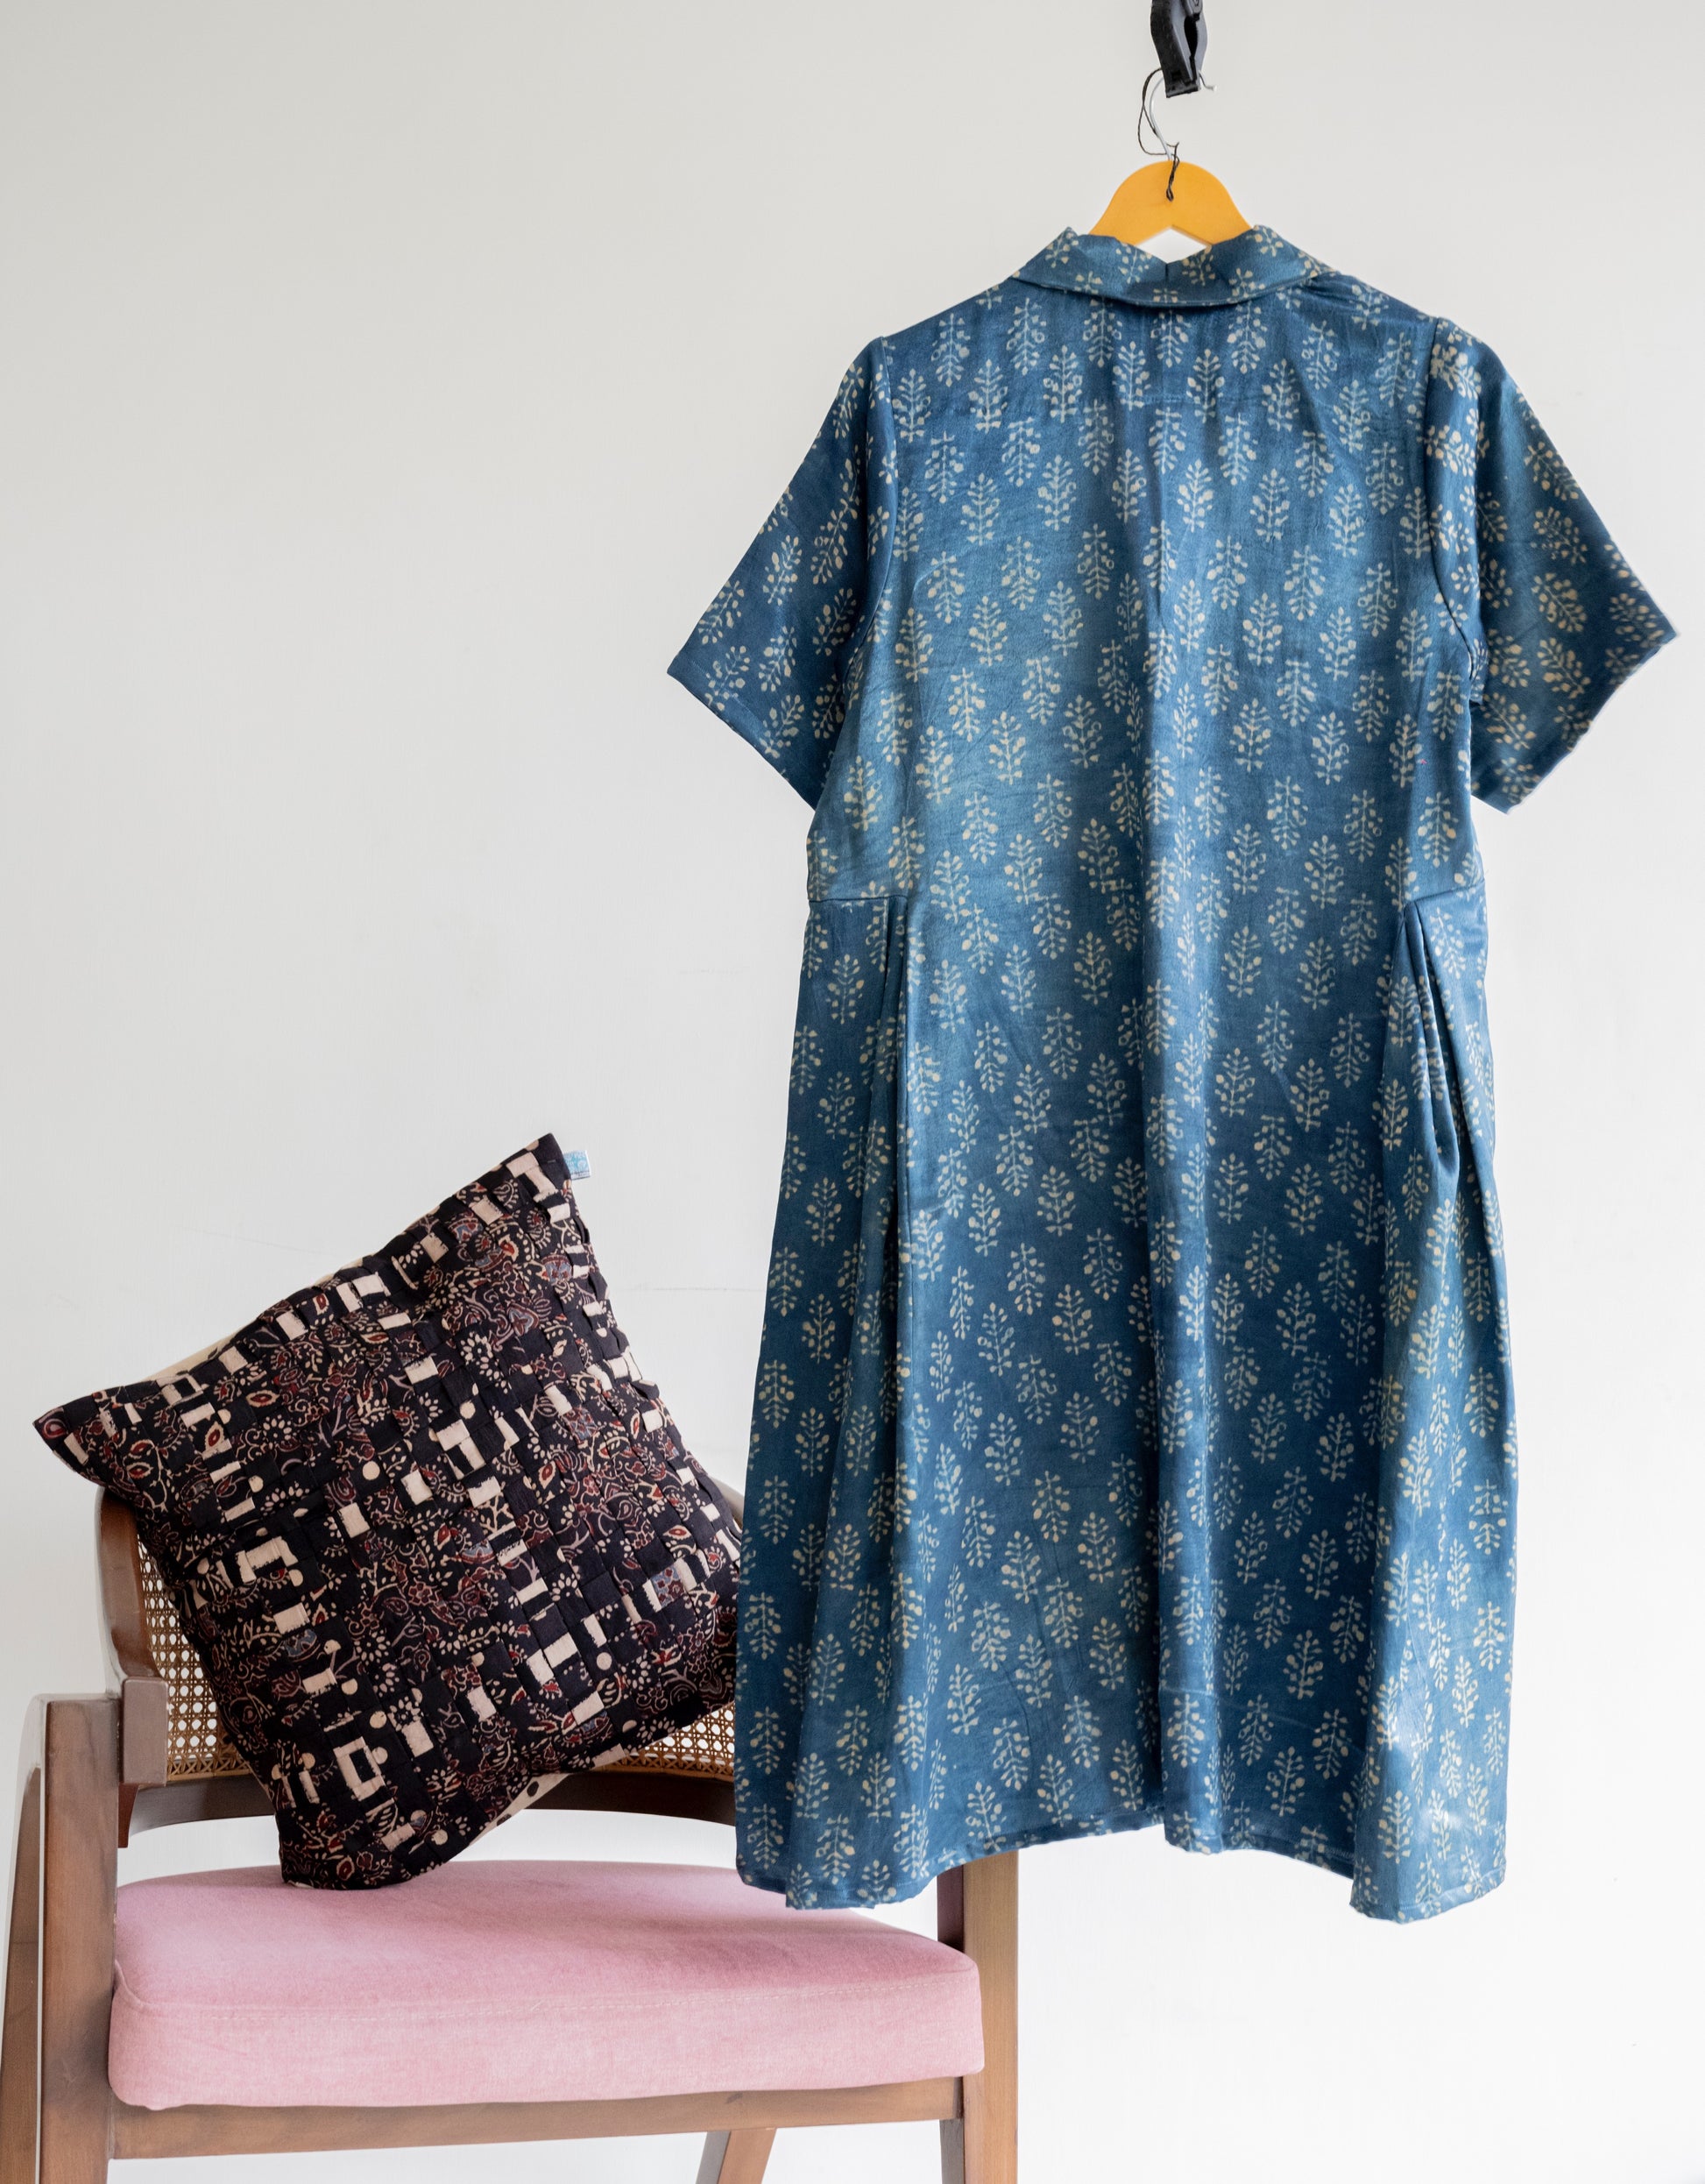 Indigo mashru silk dress, Indigo dress, Handmade silk dress, Natural dyed indigo dress